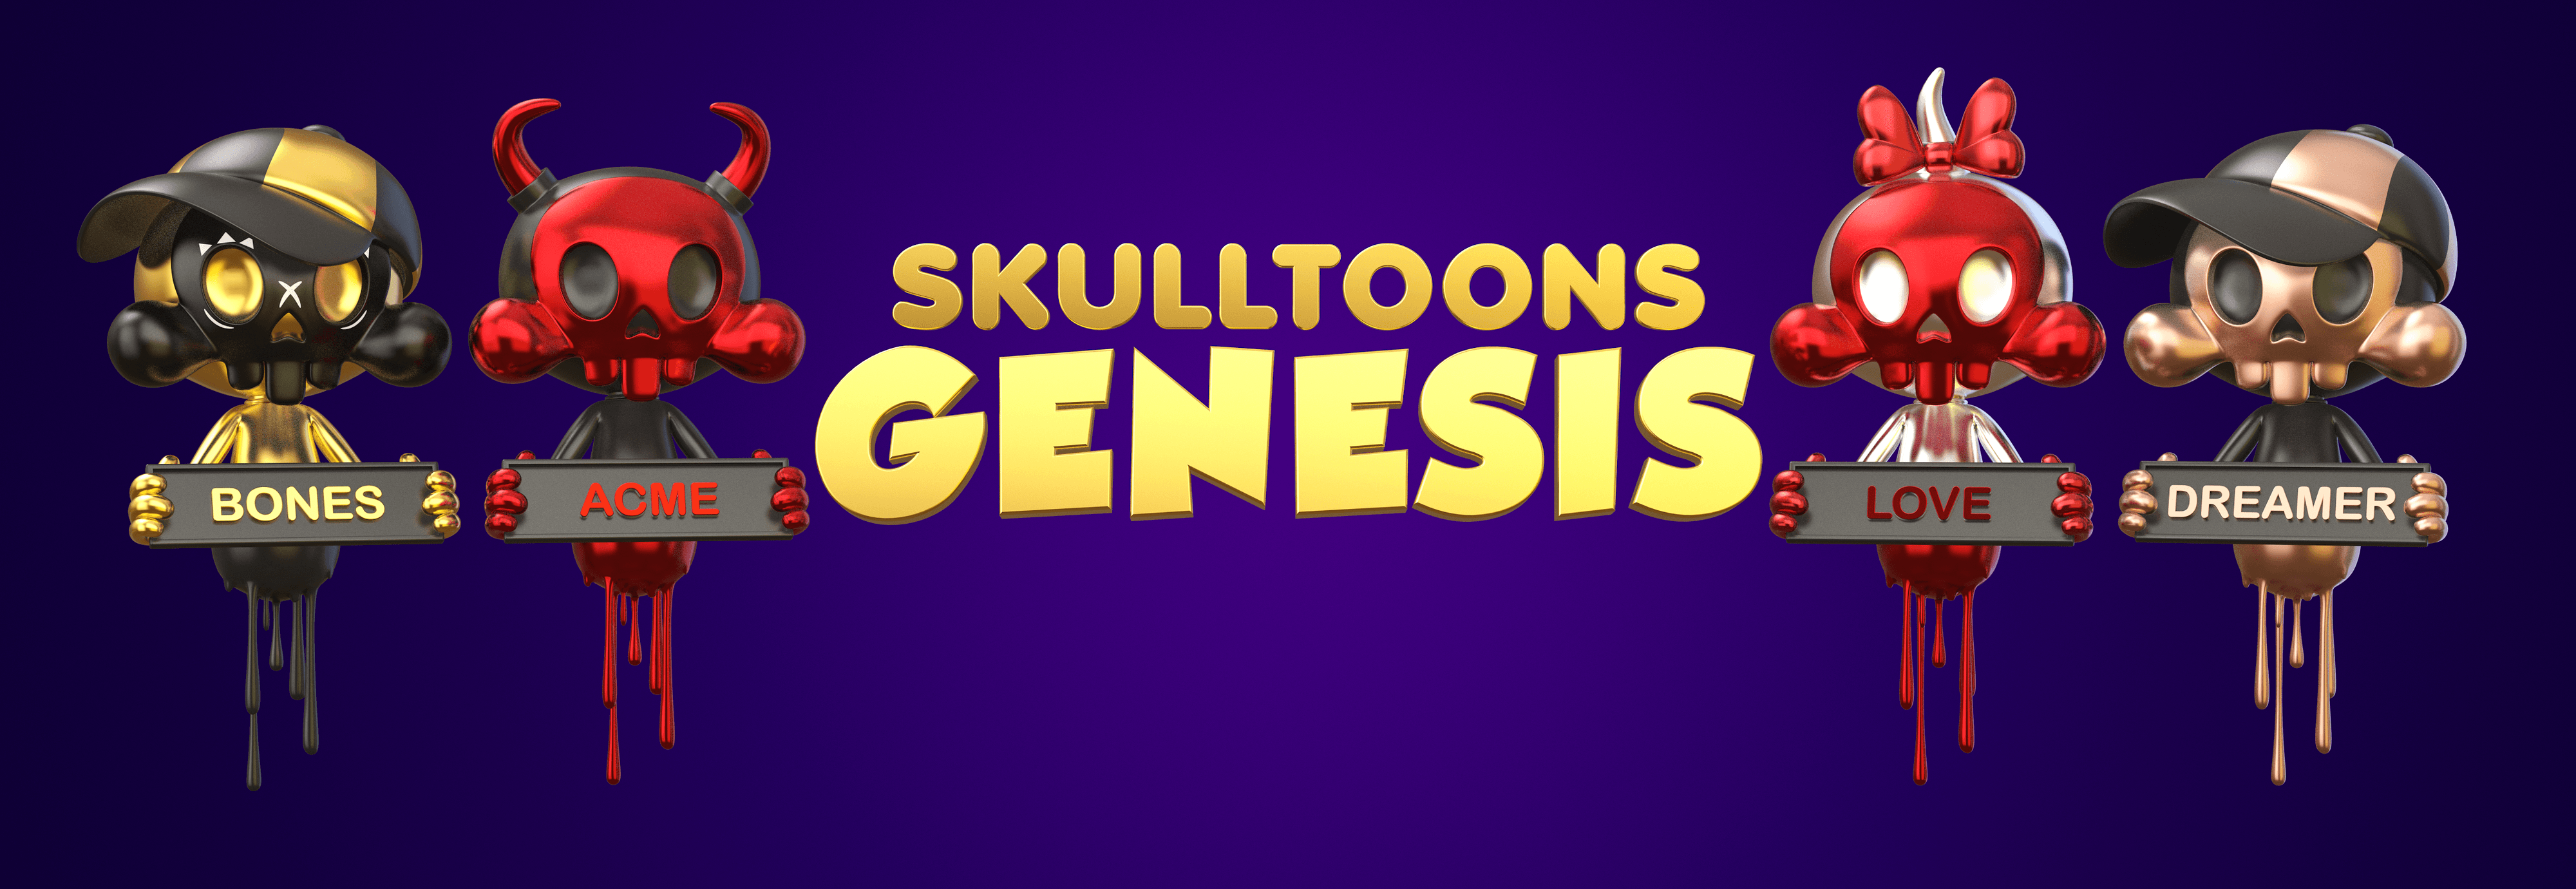 Skulltoons-Genesis bannière